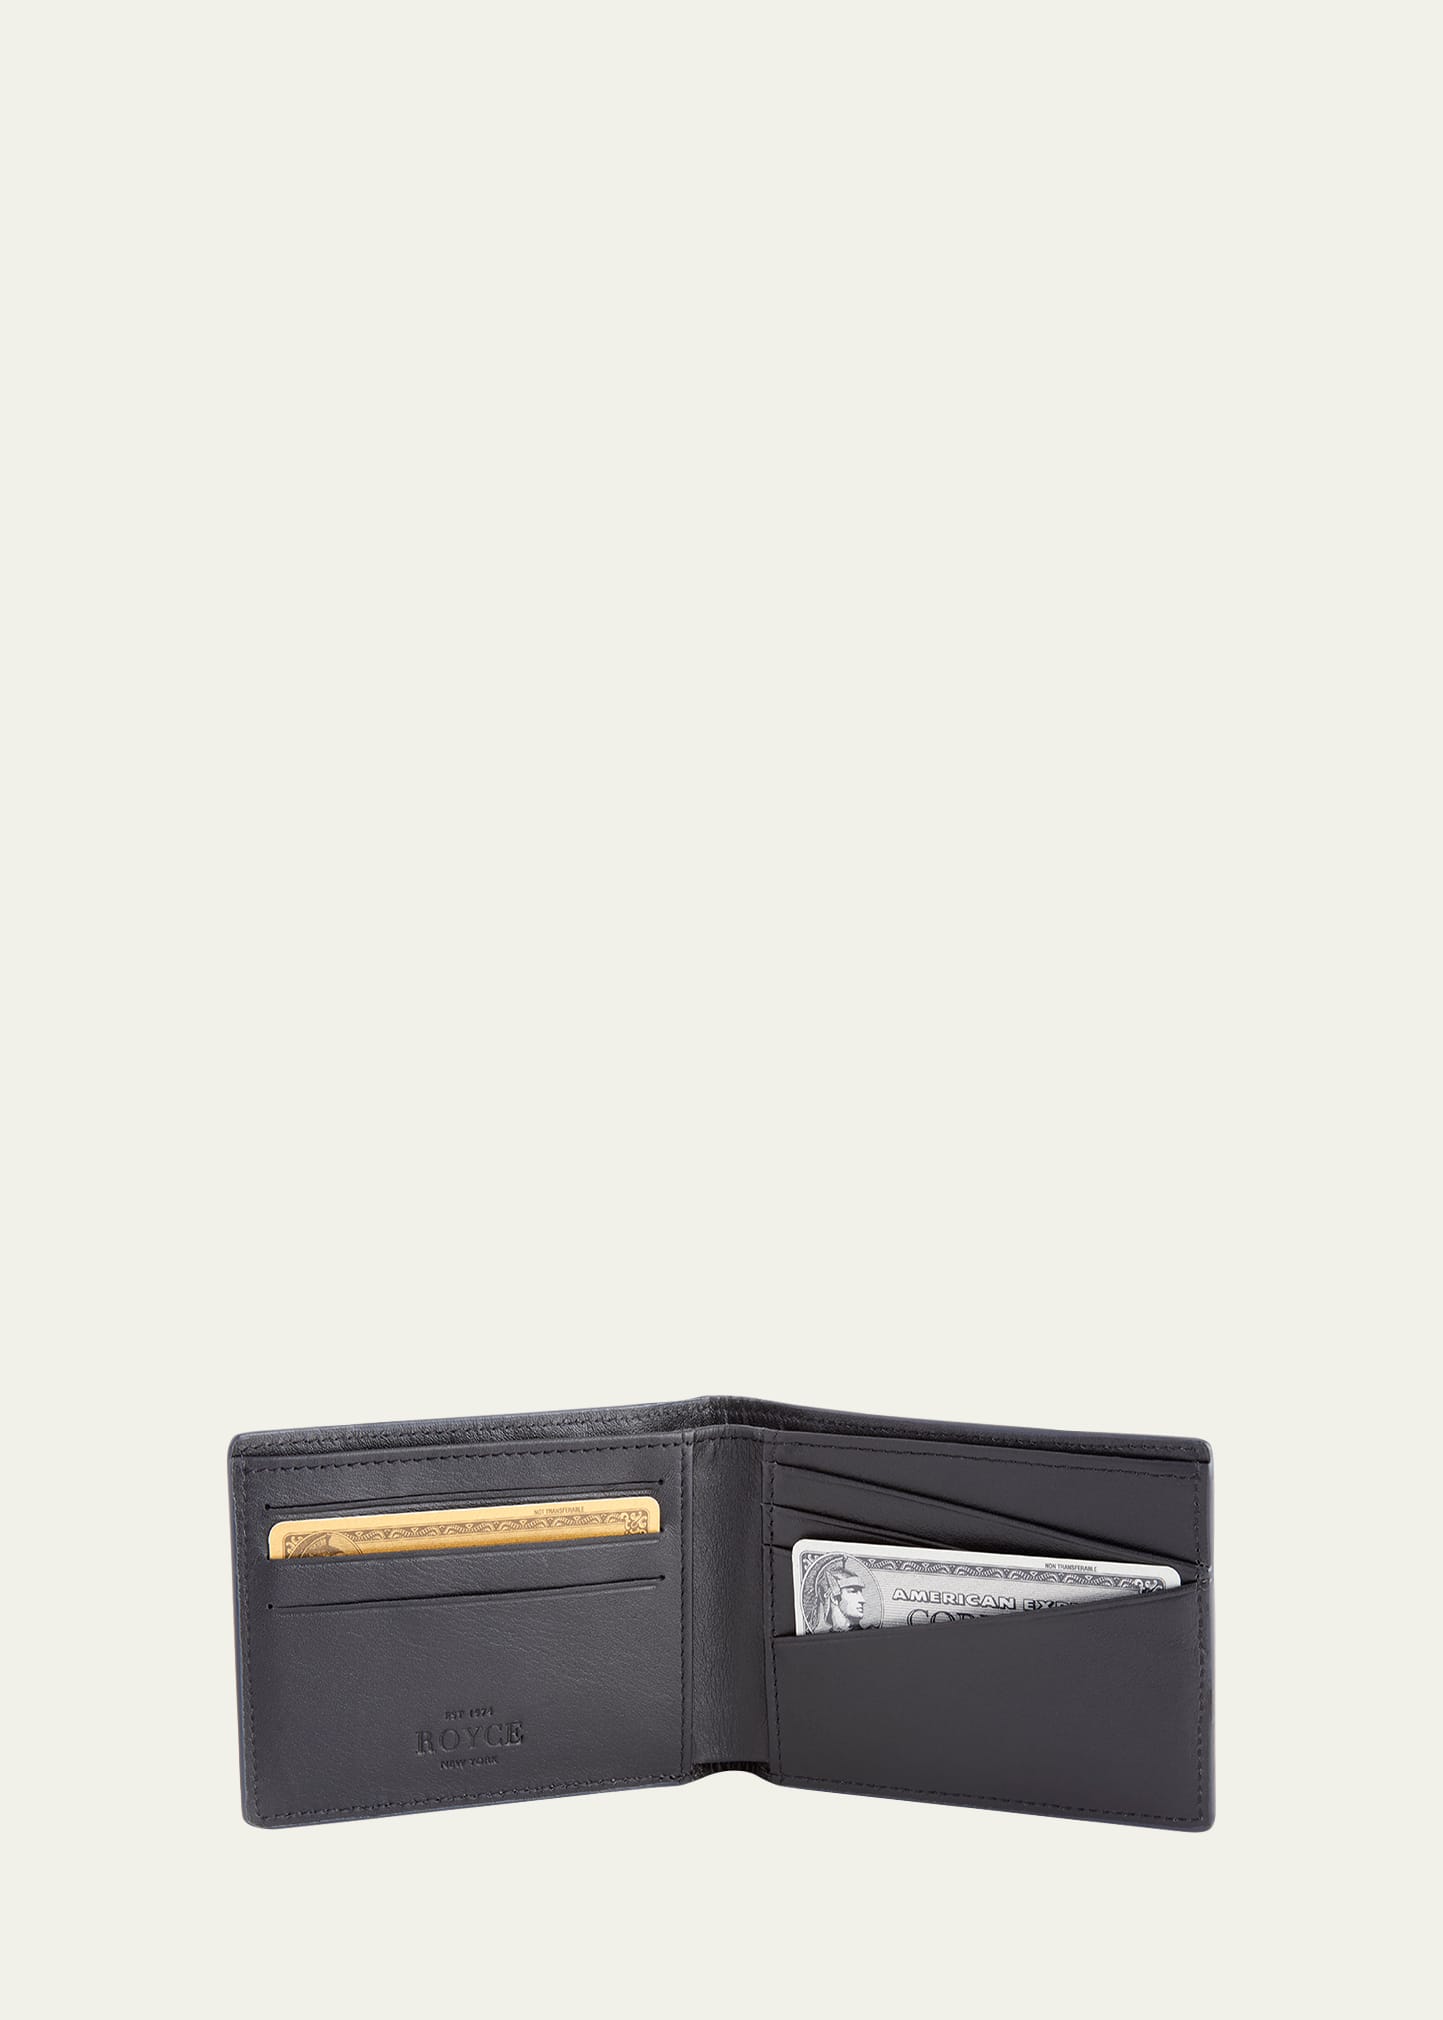 Royce New York Rfid Blocking Bifold Wallet, Personalized In Black